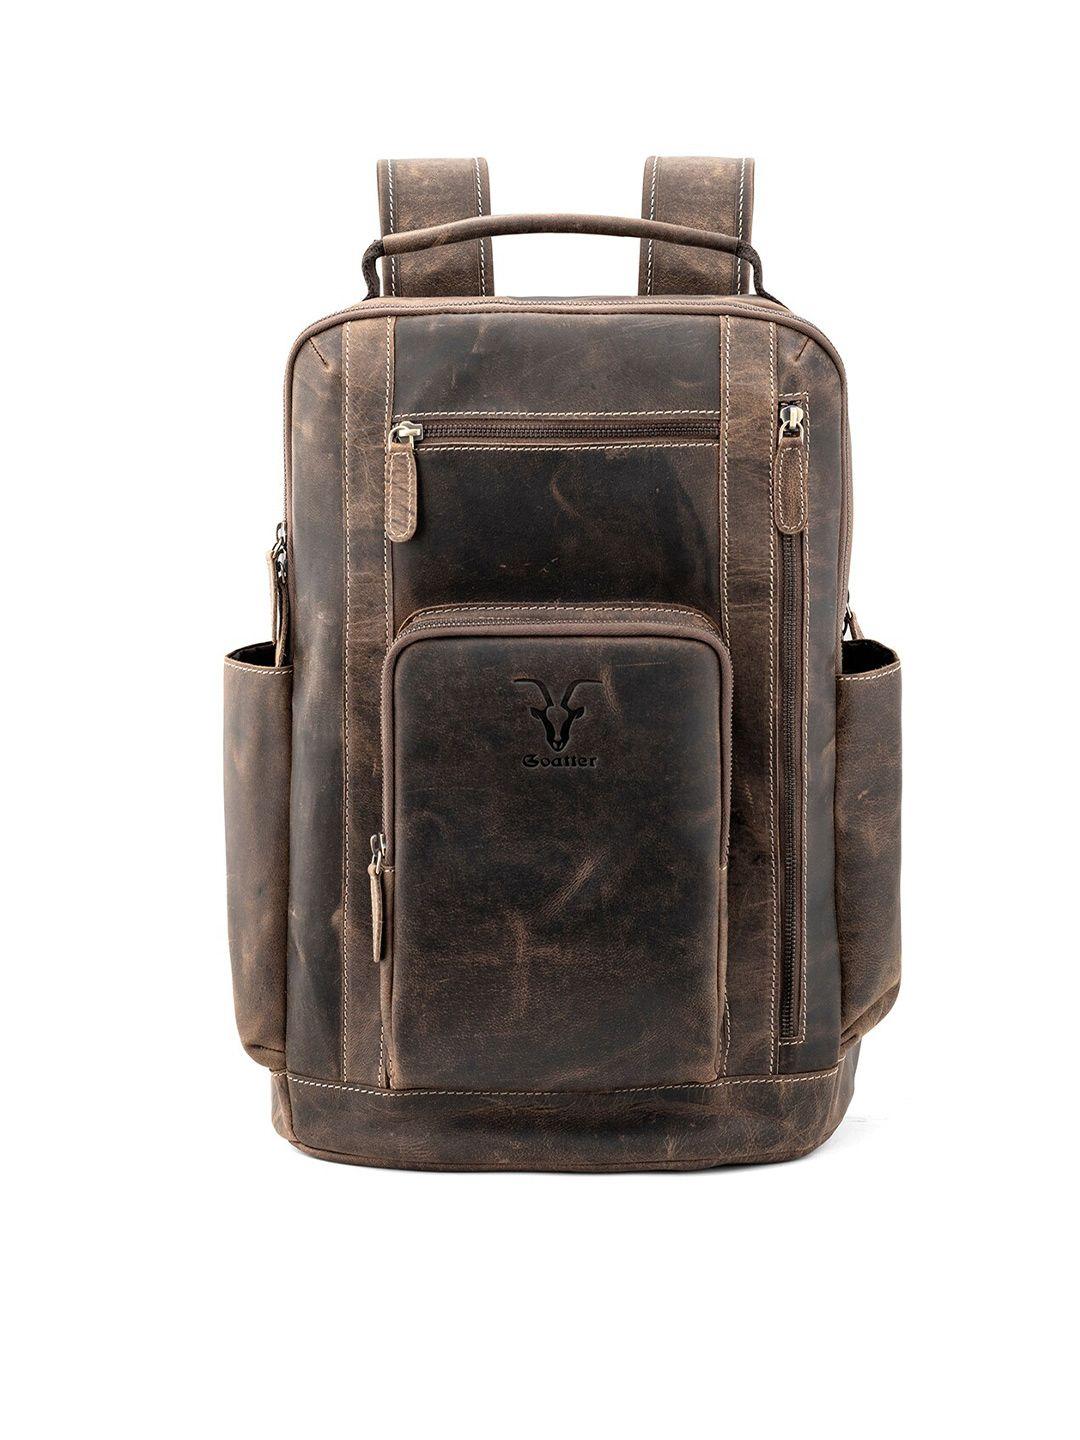 goatter men brown backpack with compression straps